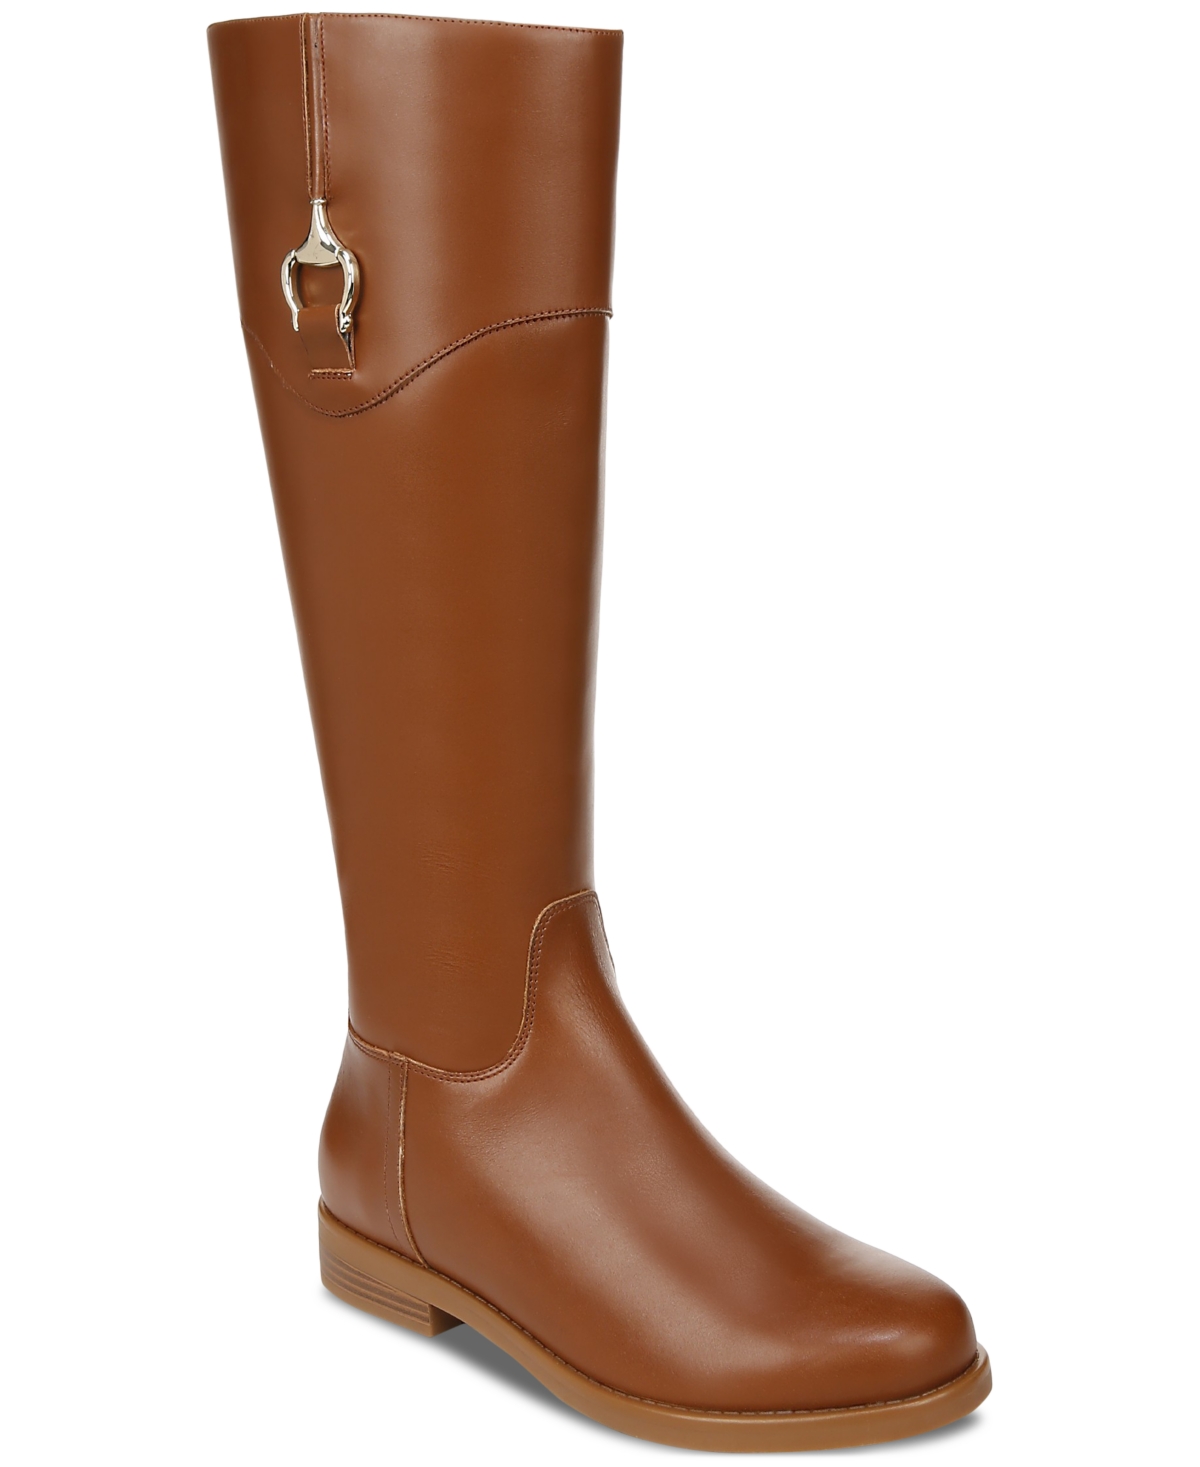 Women's Sandraa Memory Foam Knee High Riding Boots, Created for Macy's - Cinnamon